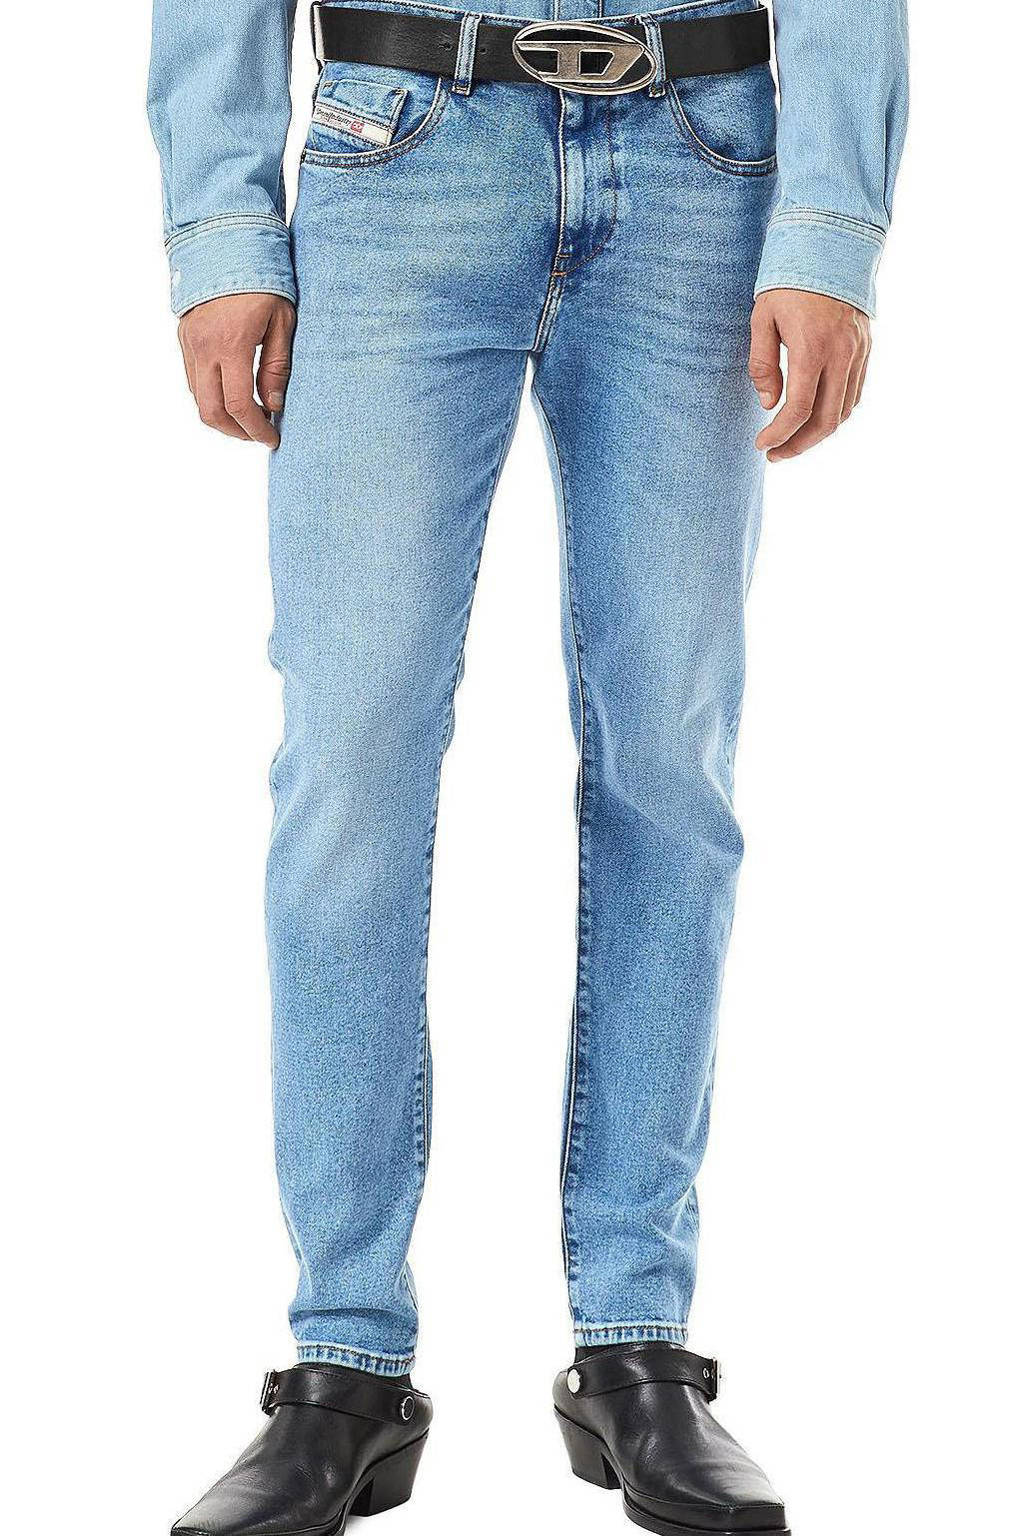 Diesel slim fit jeans D-STRUKT 09b9201 light denim